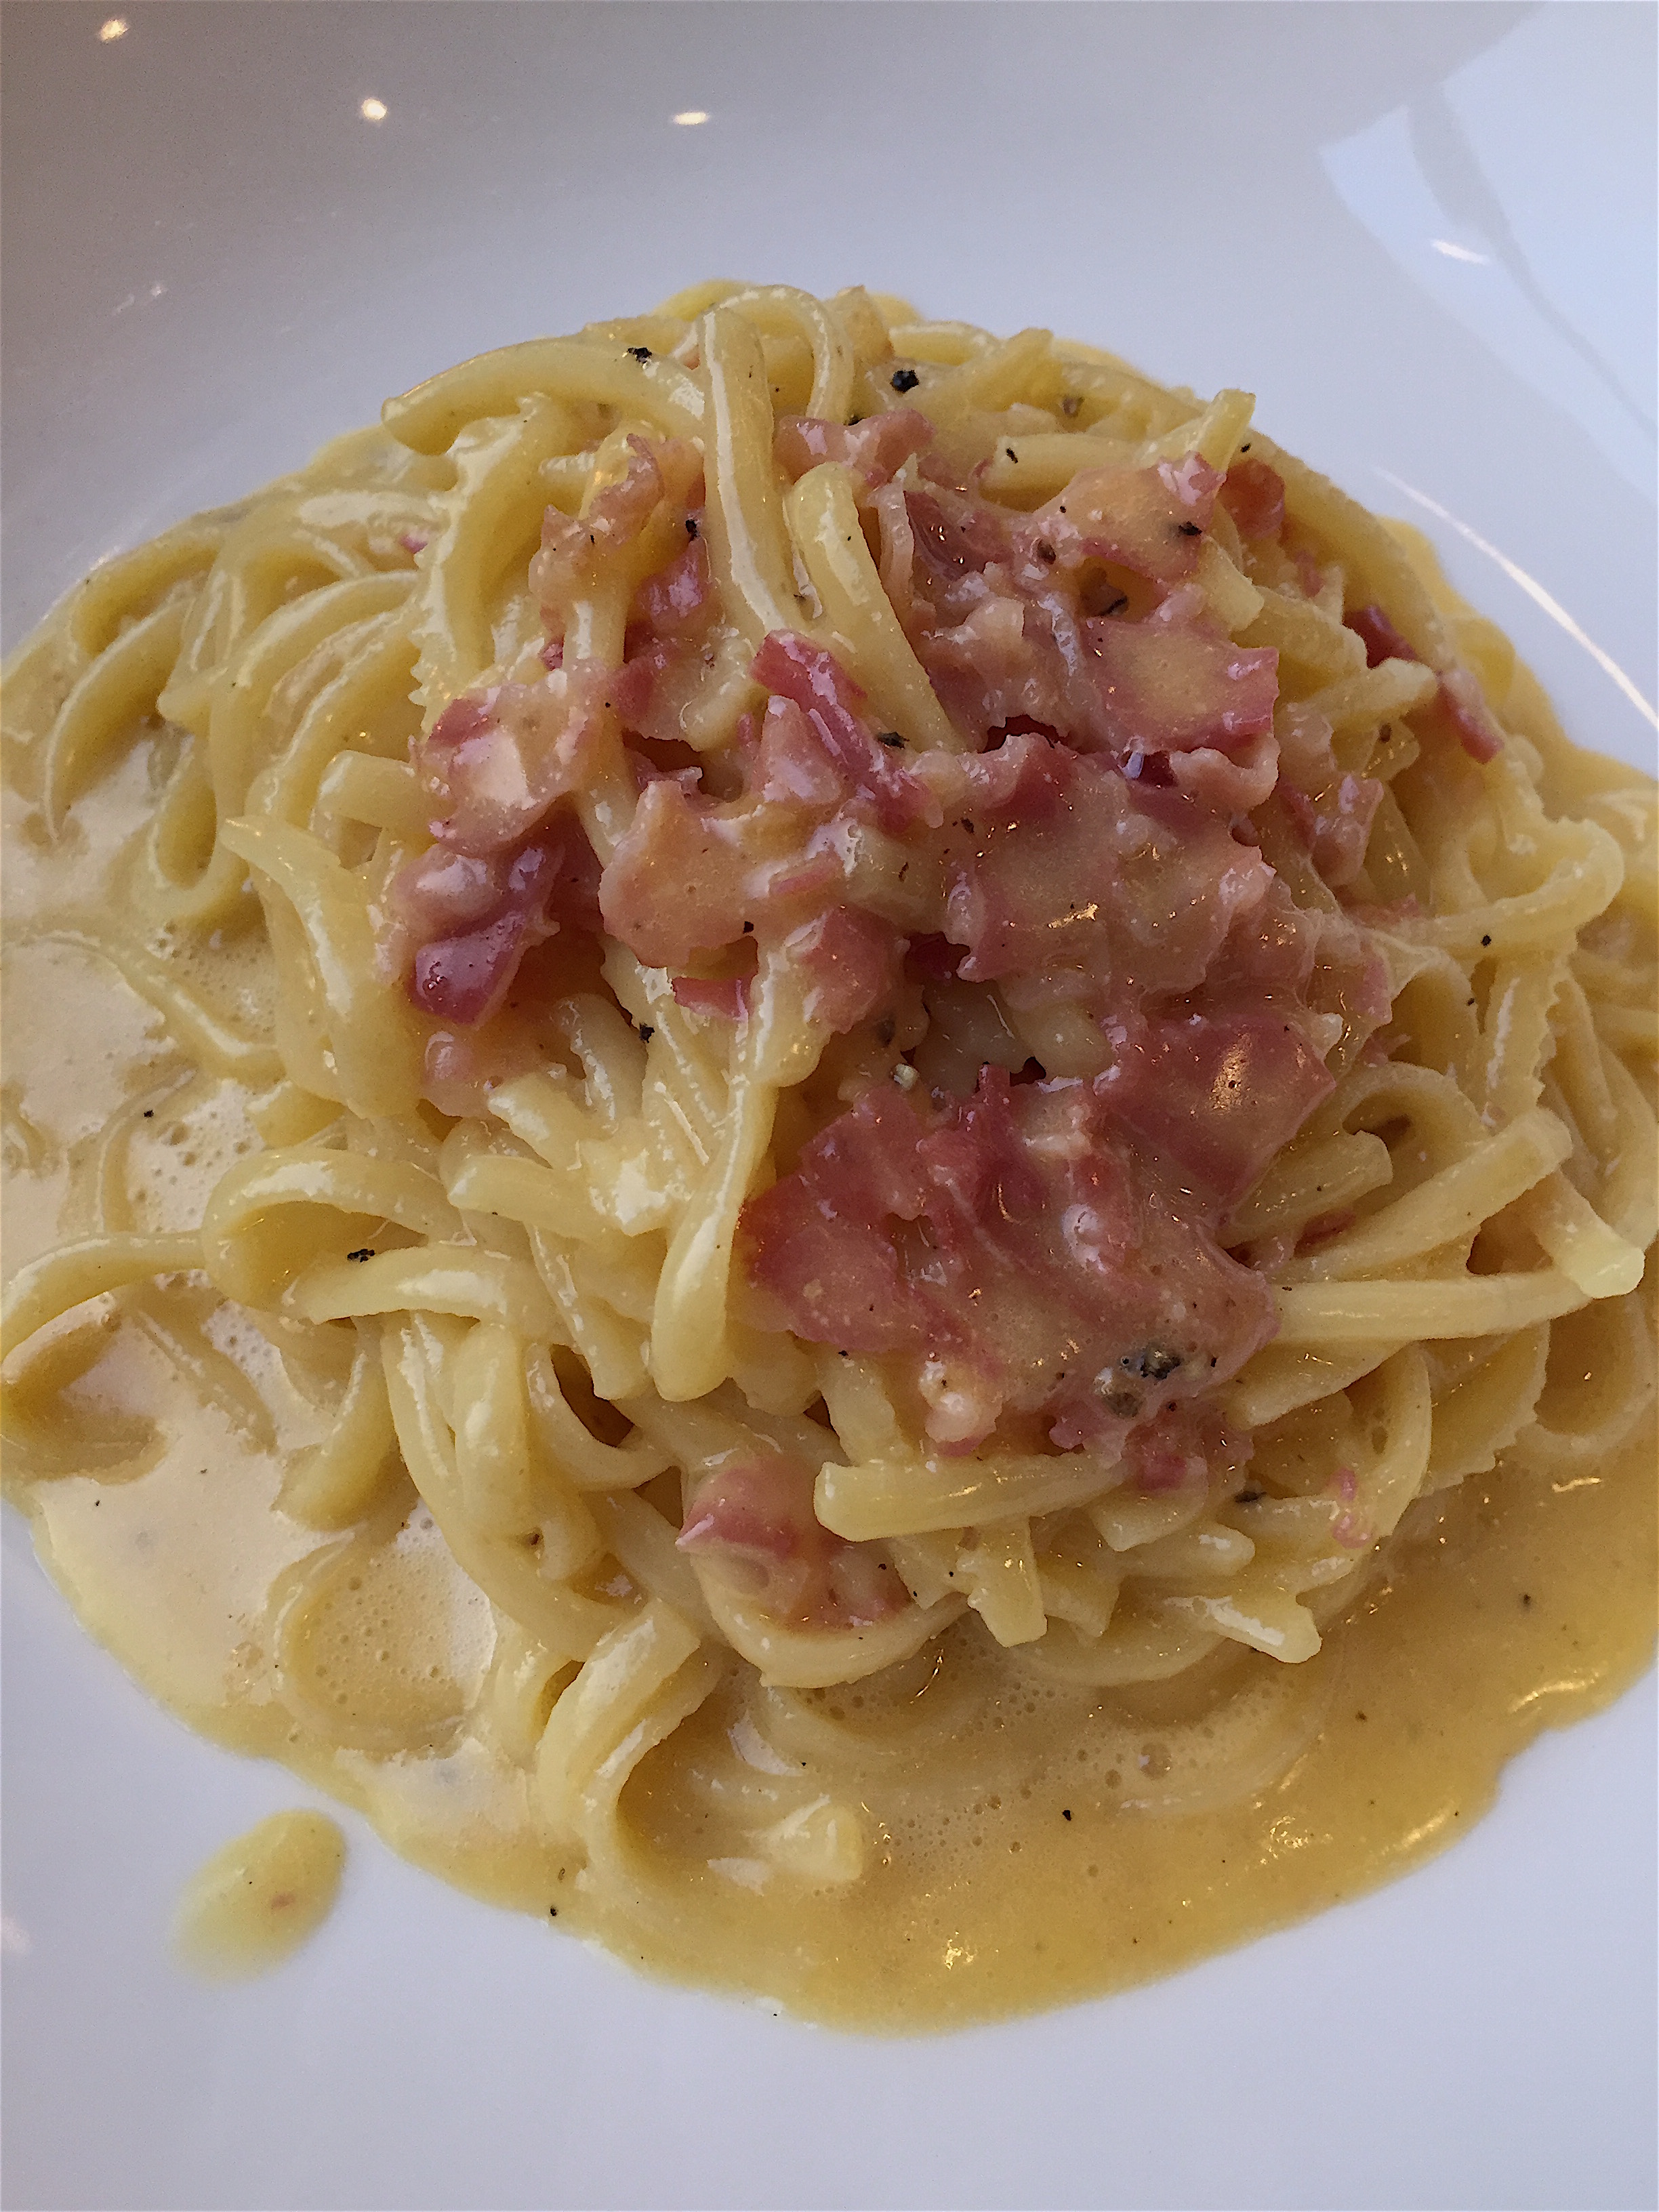 Daroco - Spaghetti carbonara @AlexanderLobrano